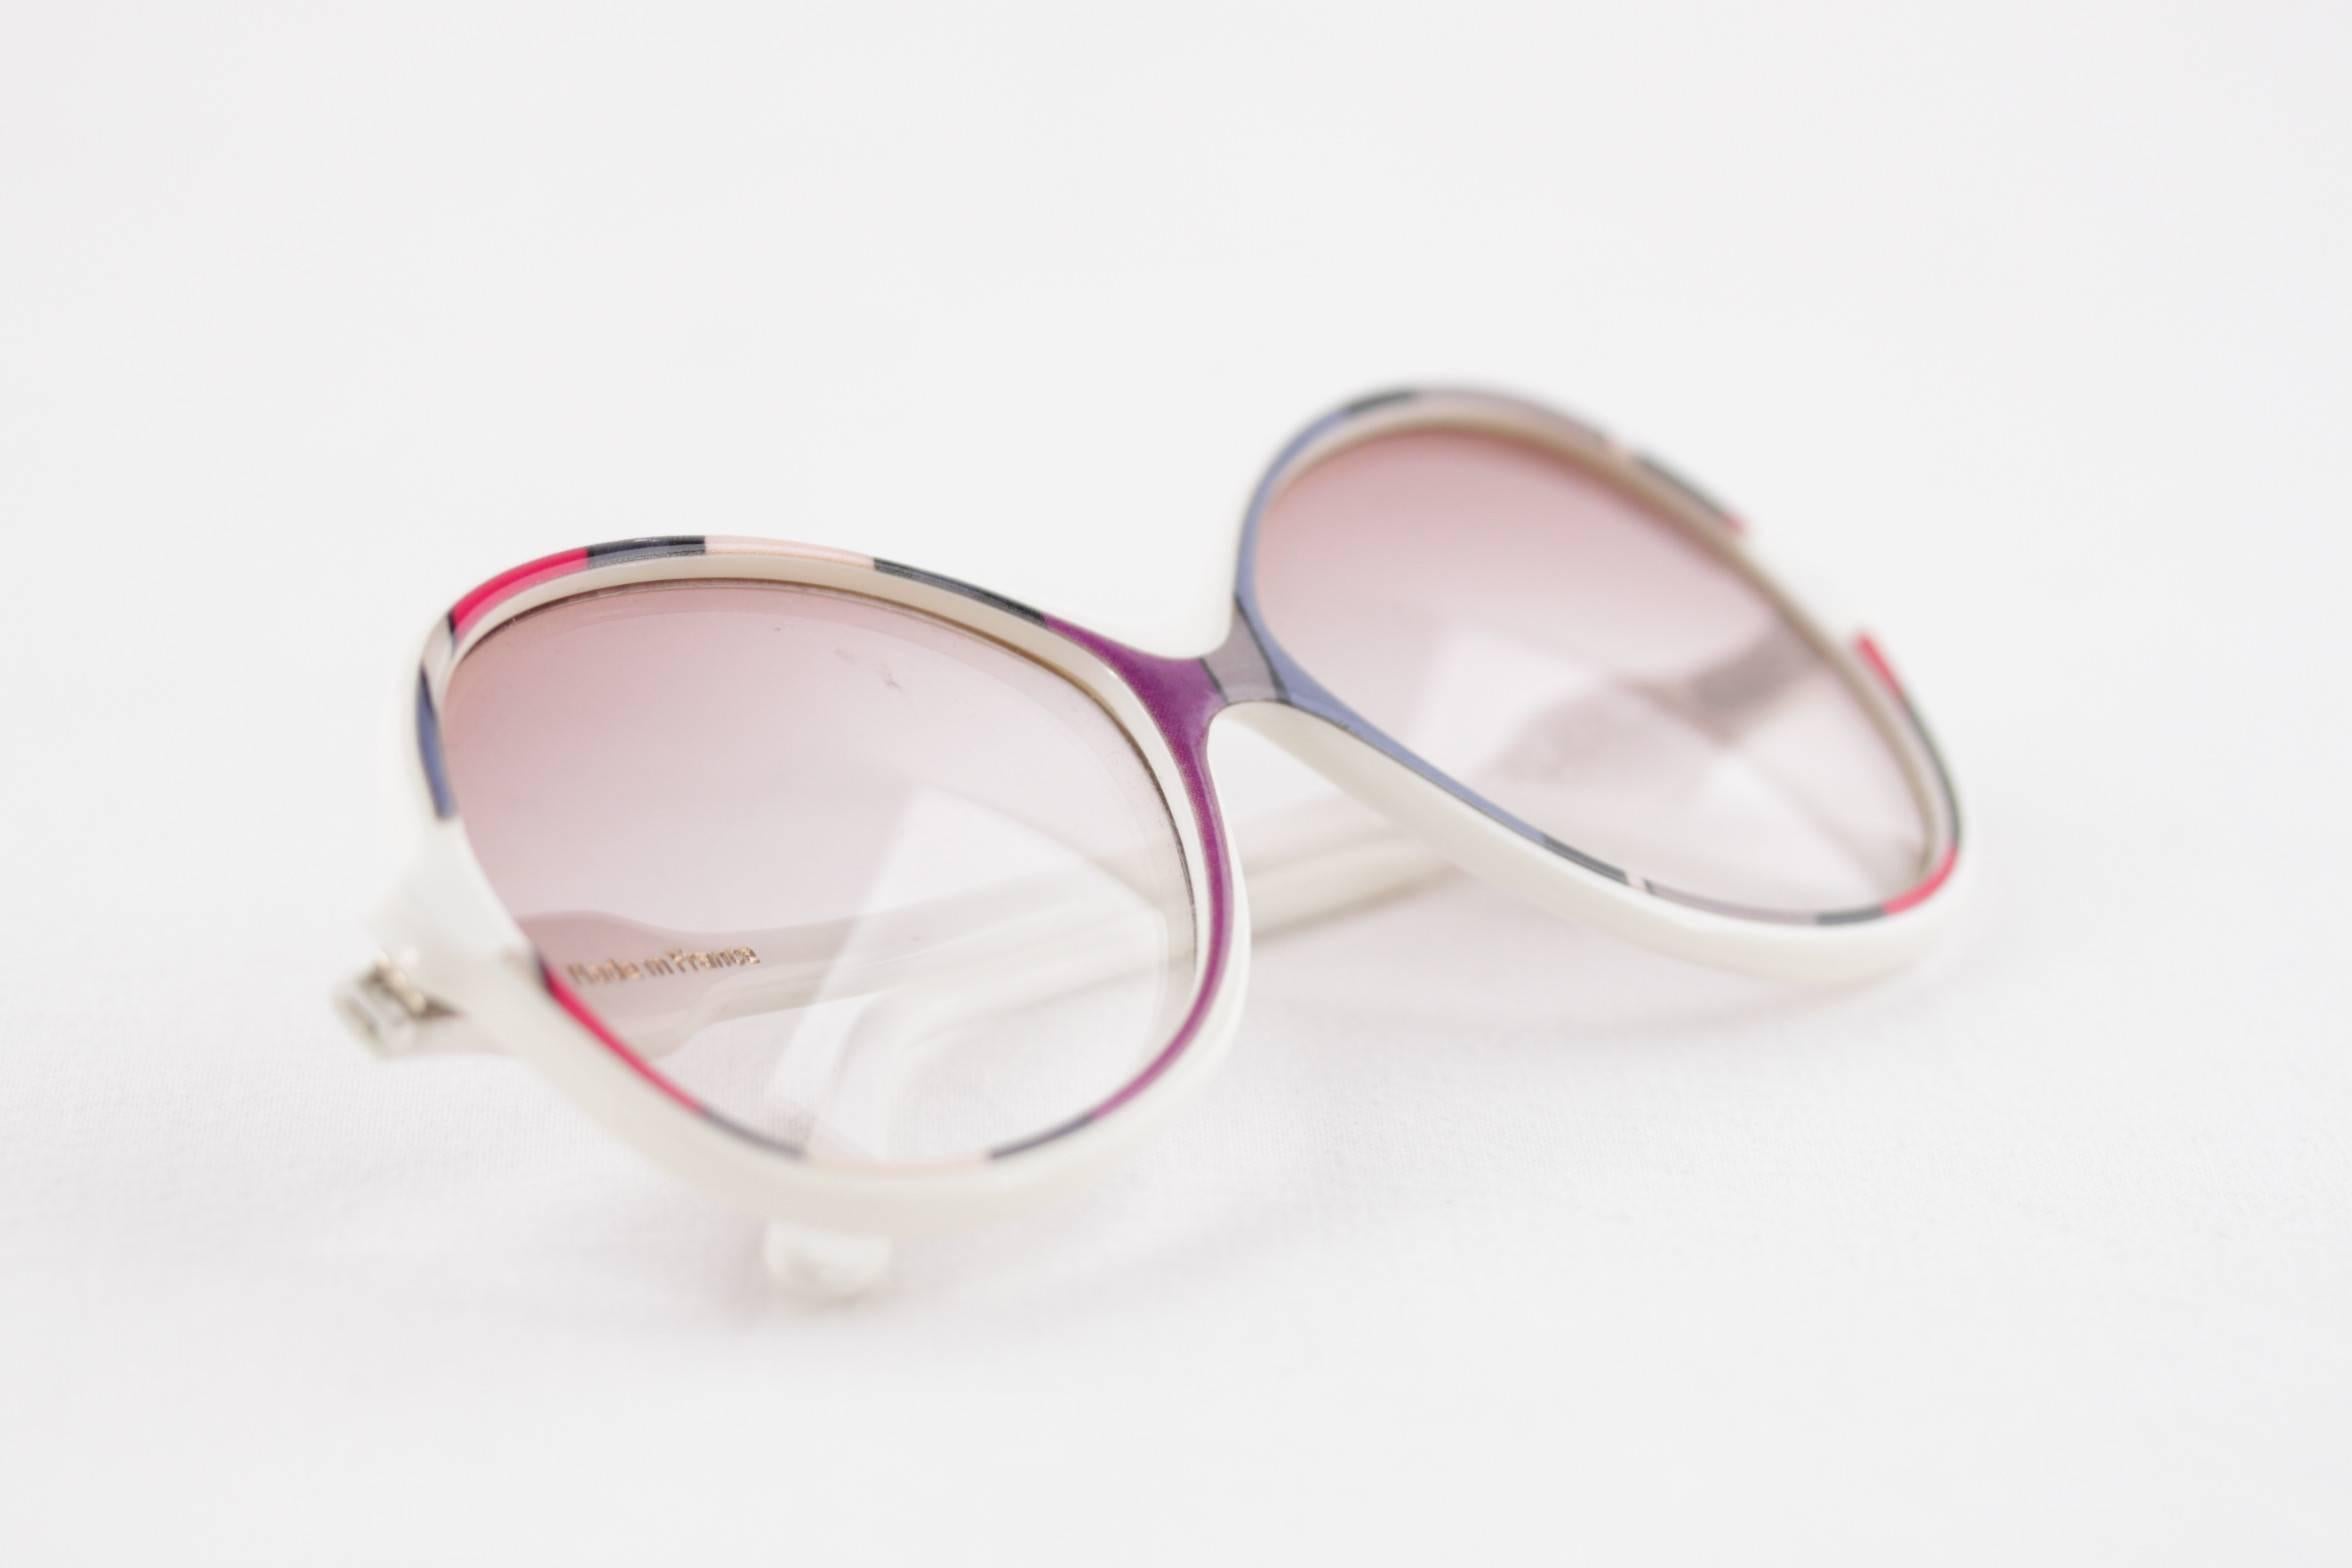 EMILIO PUCCI Vintage OVERSIZED SUNGLASSES White/Pink Gradient lens eyewear MP 1